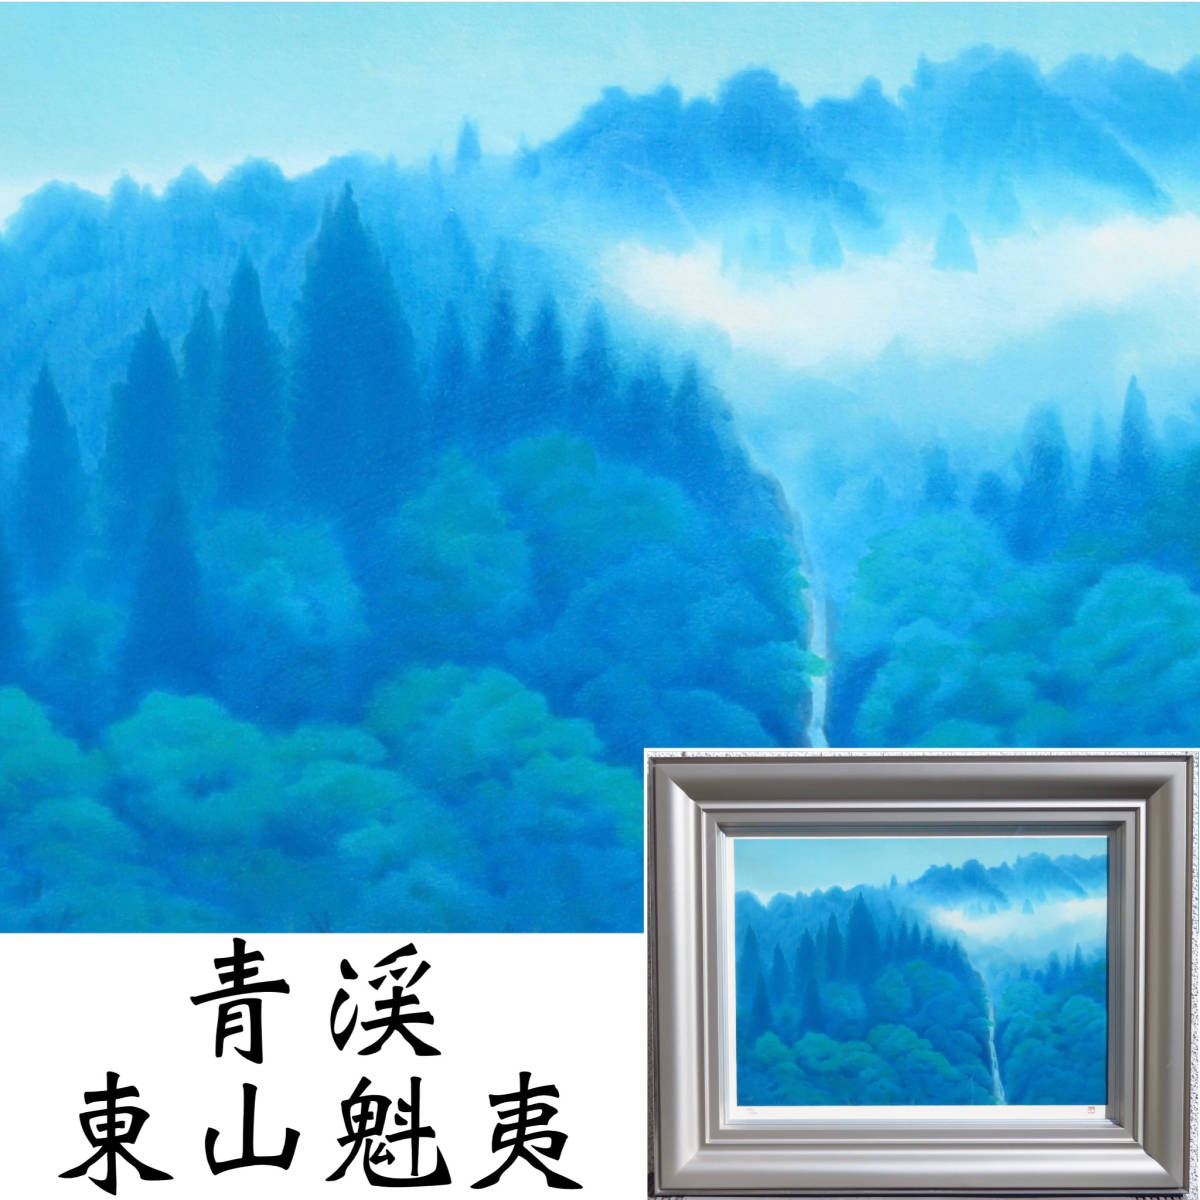 [SAKURAYA] 正品保证艺术品 [Seikei/Higashiyama Kaii] 石版画限量 250 份山水画艺术艺术家艺术家题词联印古董 75.3 x 61.2, 艺术品, 打印, 石版画, 石版画